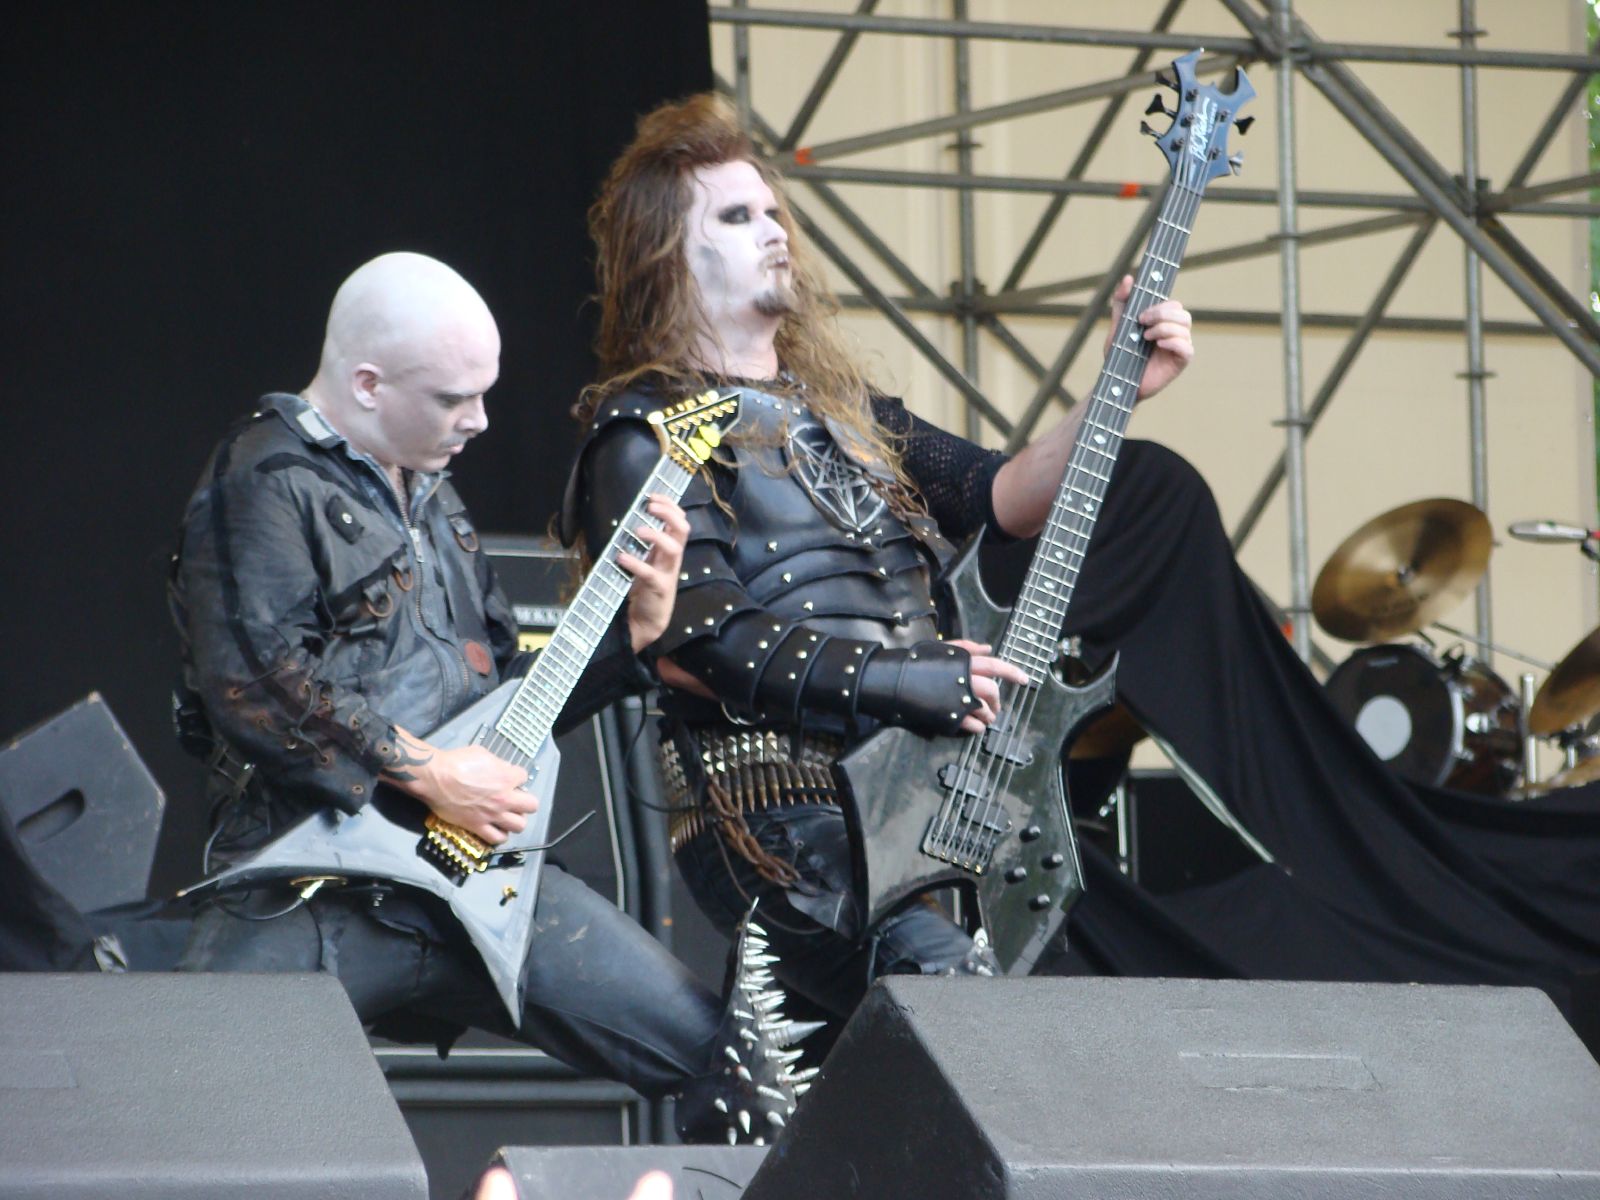 Shagrath of Dimmu Borgir performs as part of Ozzfest 2004 at